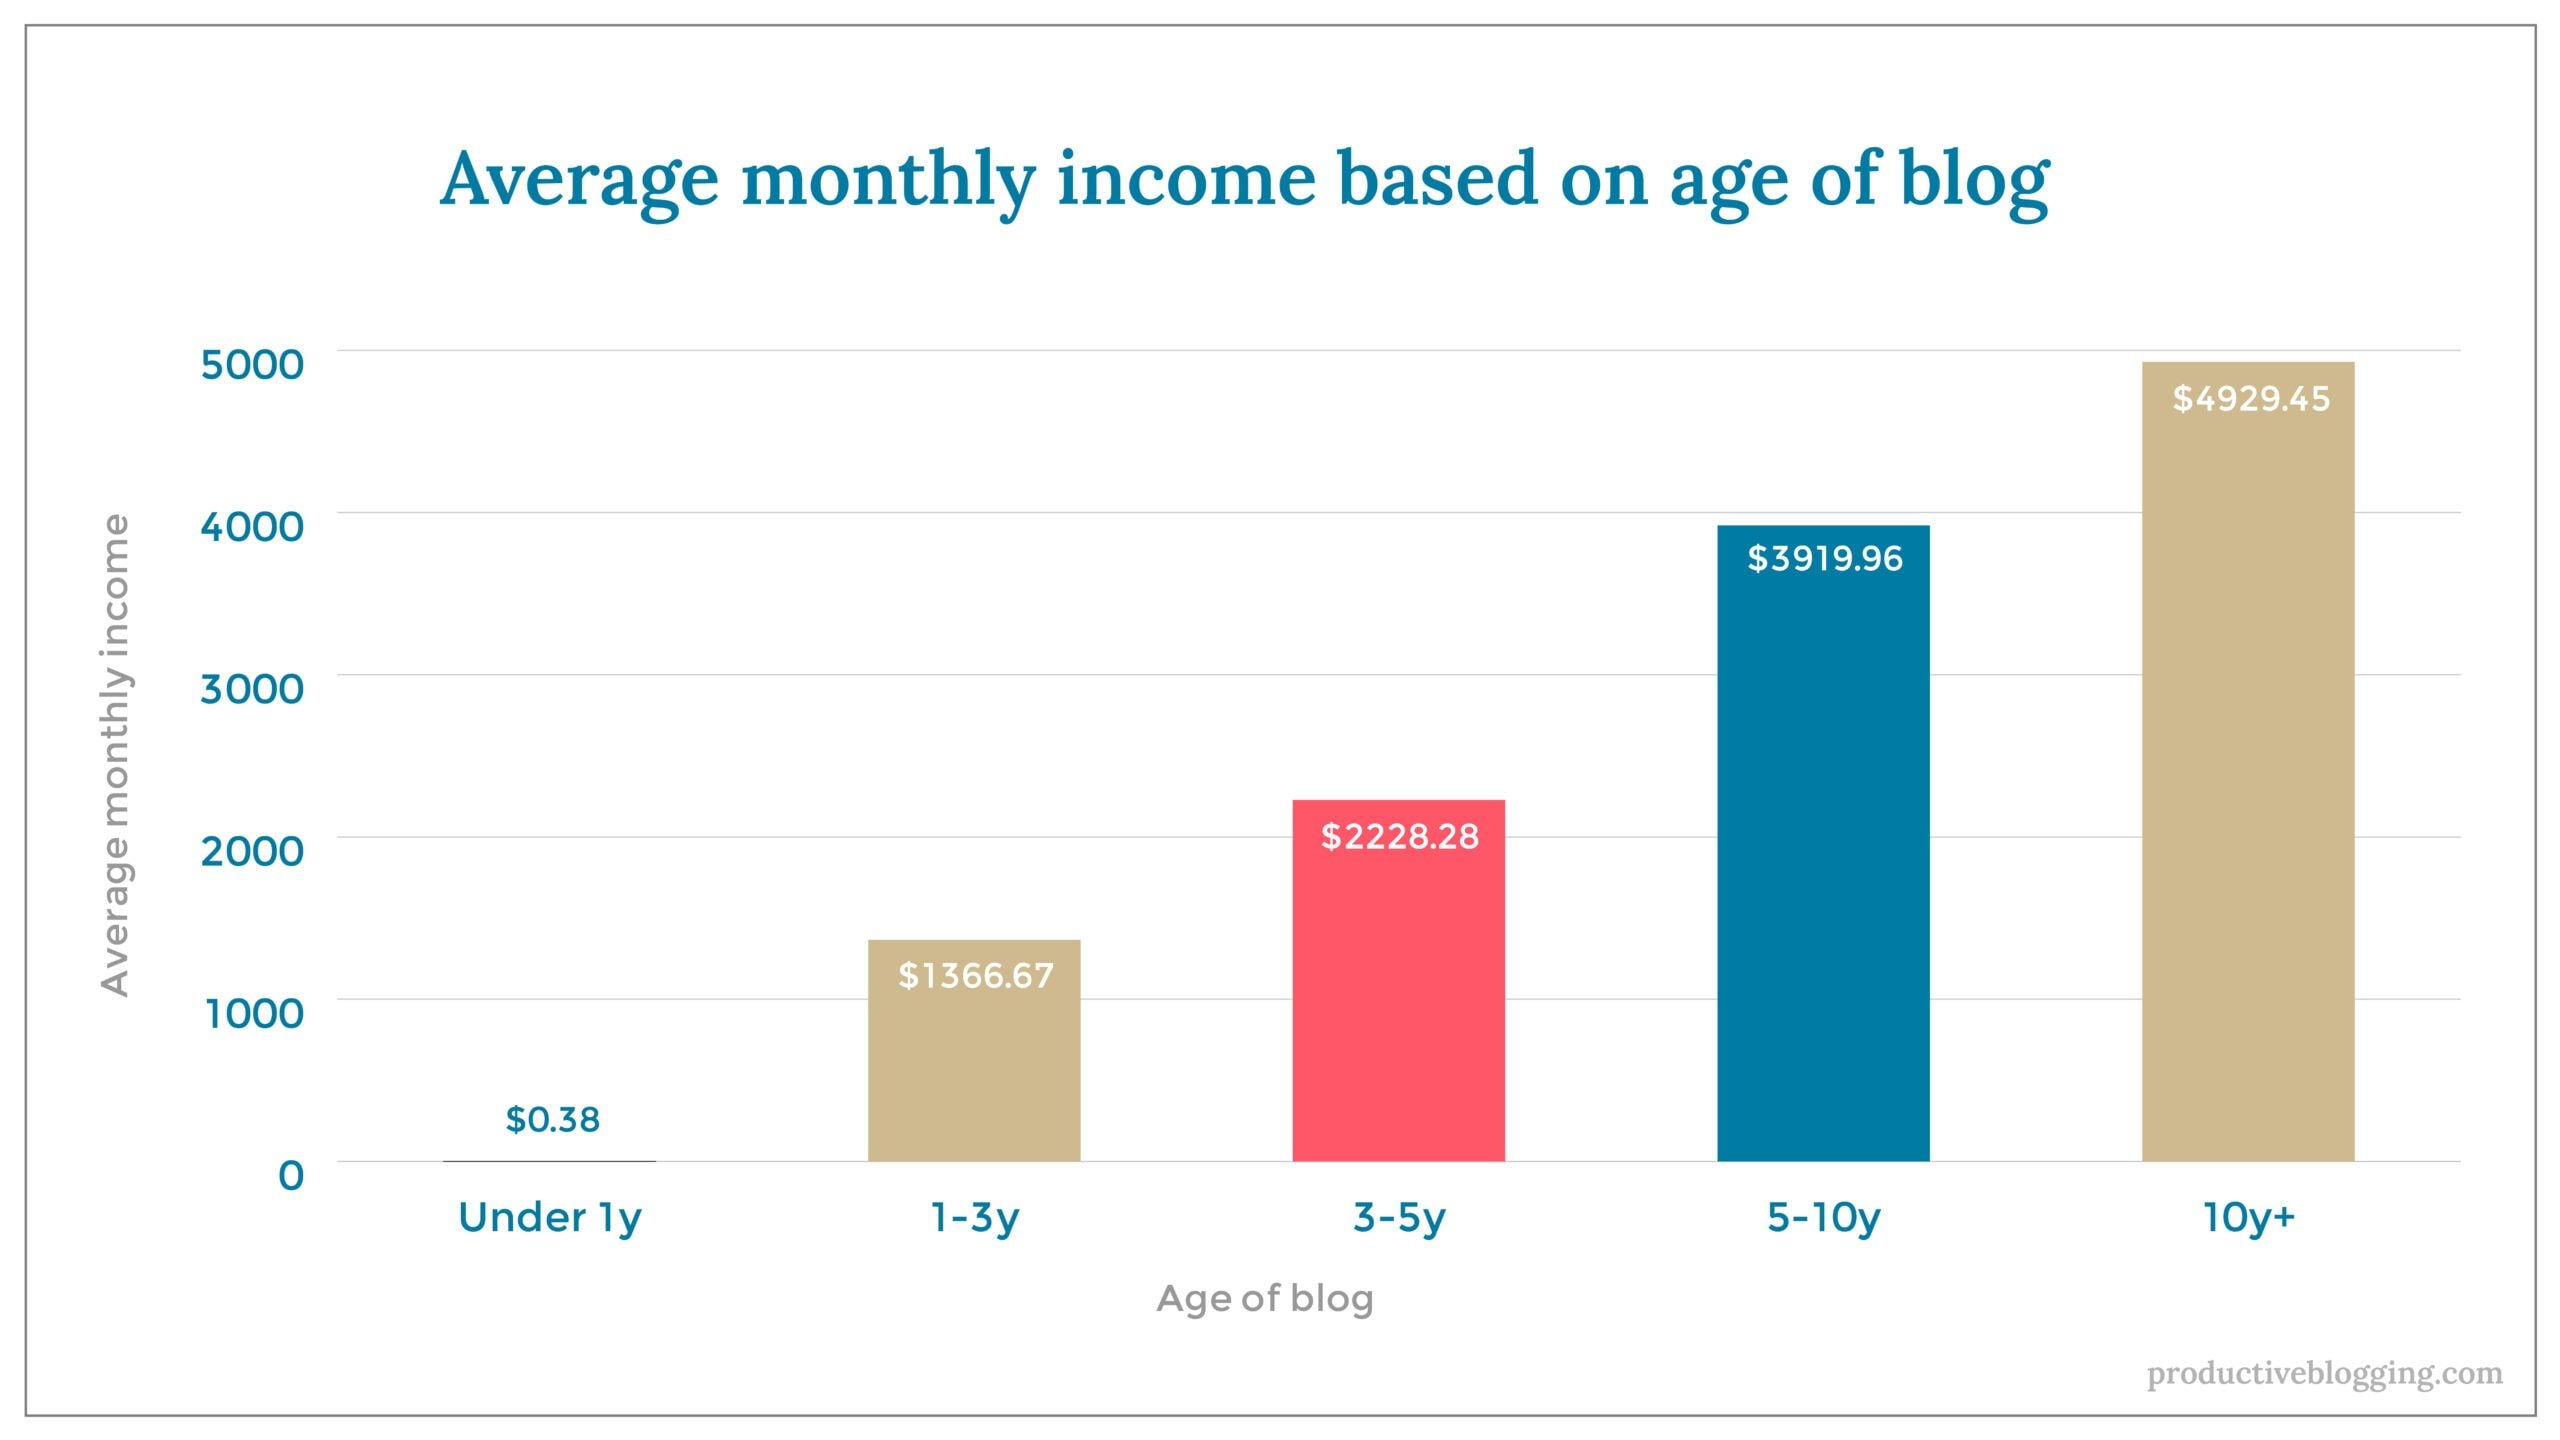 Average monthly income based on age of blogX axis: Age of blogY axis: Average monthly incomeUnder 1y 	$0.381-3y 		$1,366.673-5y 		$2,228.285-10y 		$3,919.9610y+ 		$4,929.45